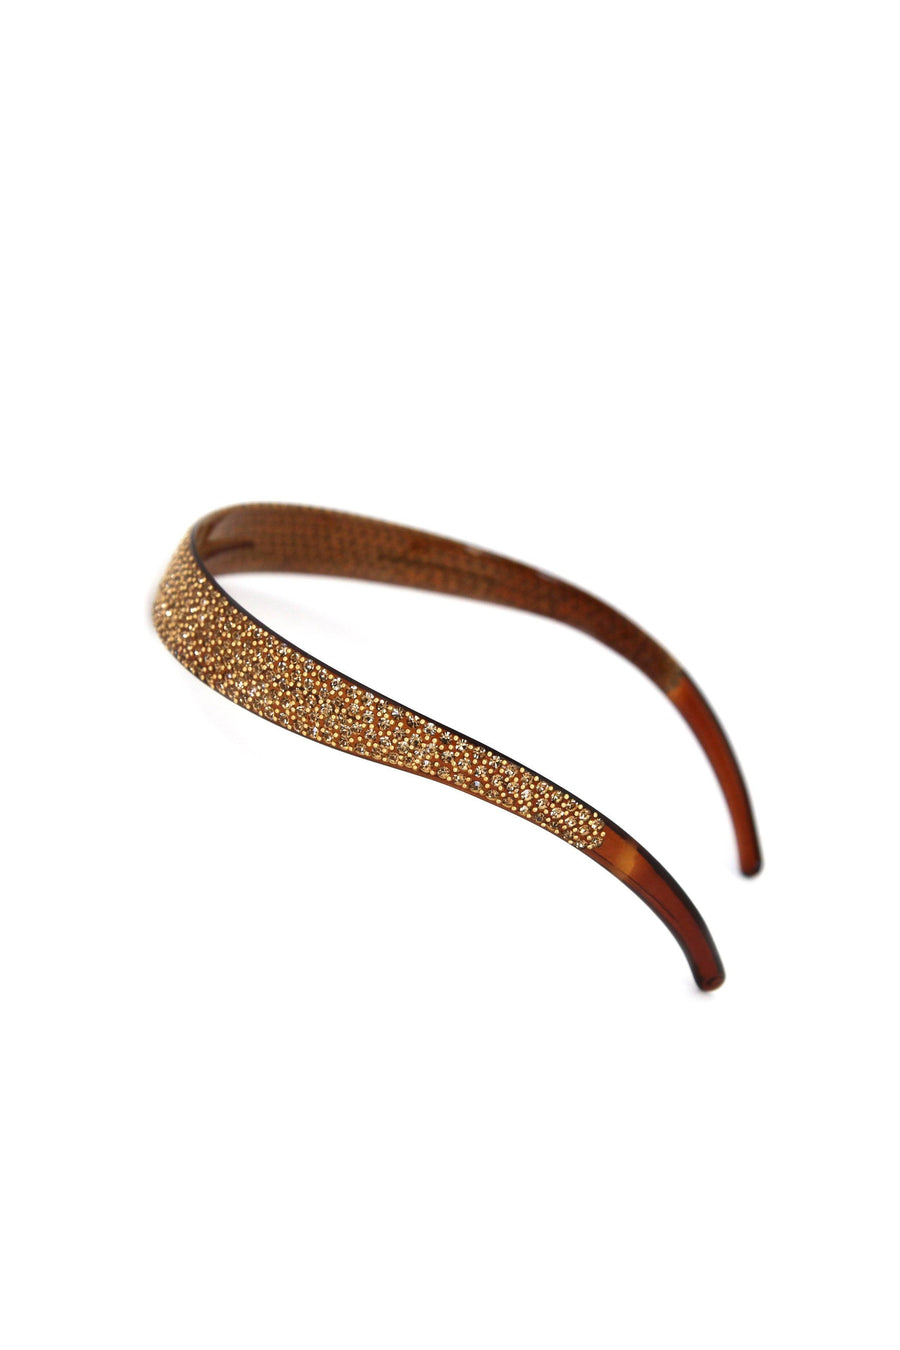 Soho Style Headband Amber Lightweight Crystal Covered Headband